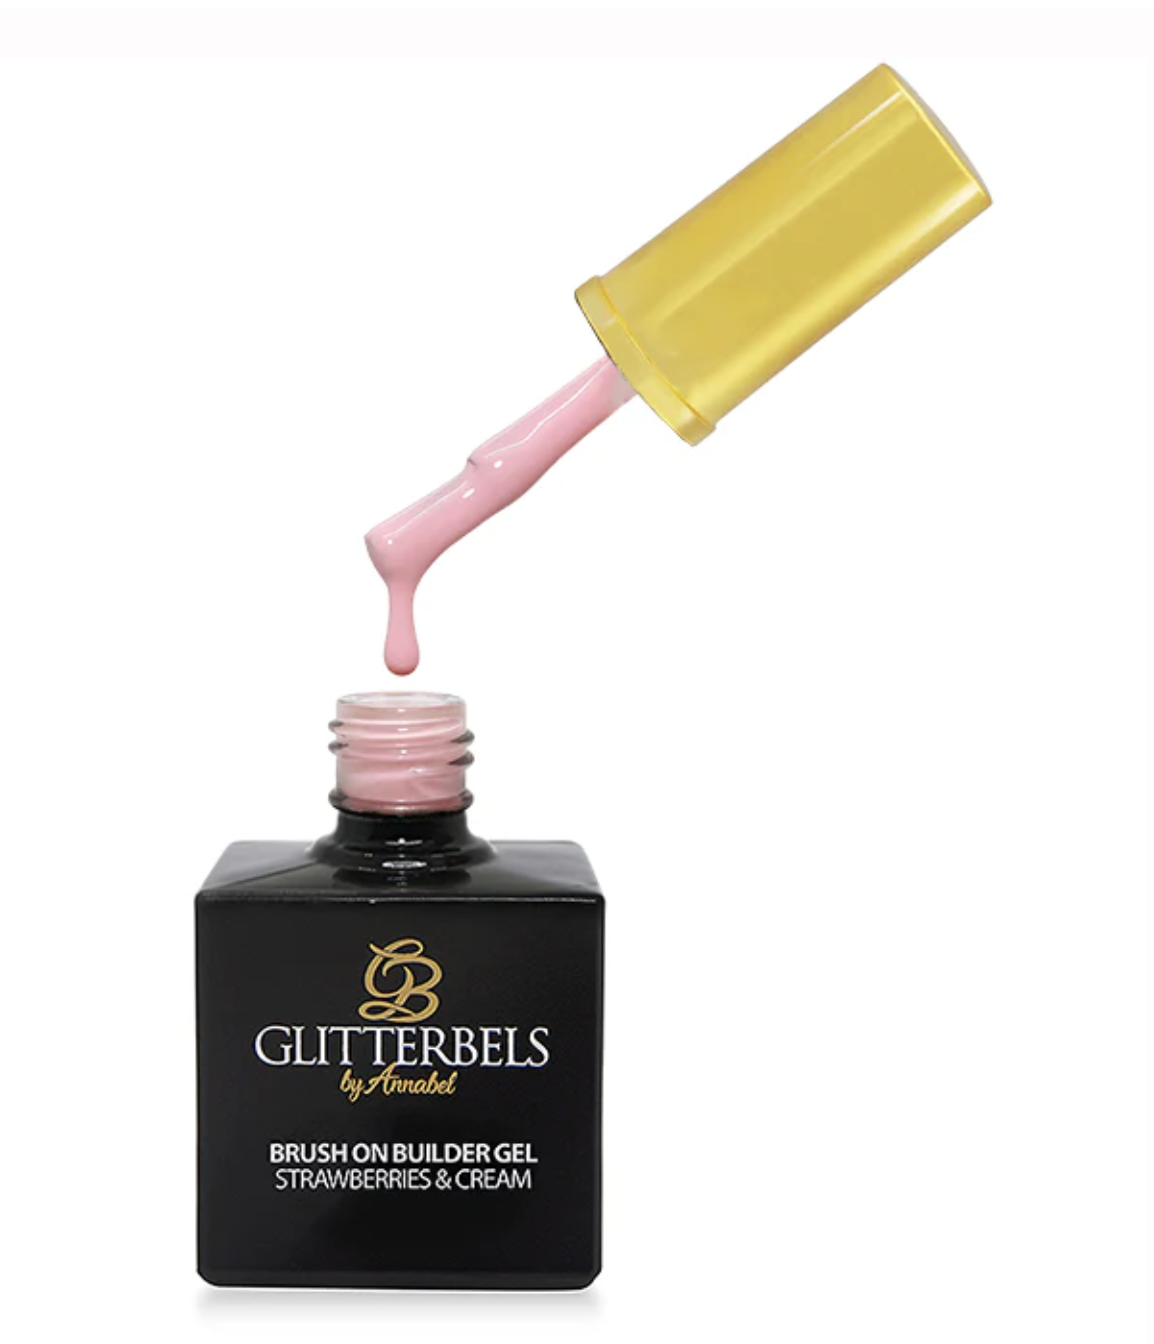 Glitterbels Brush-on Builder Gel Strawberries & Cream